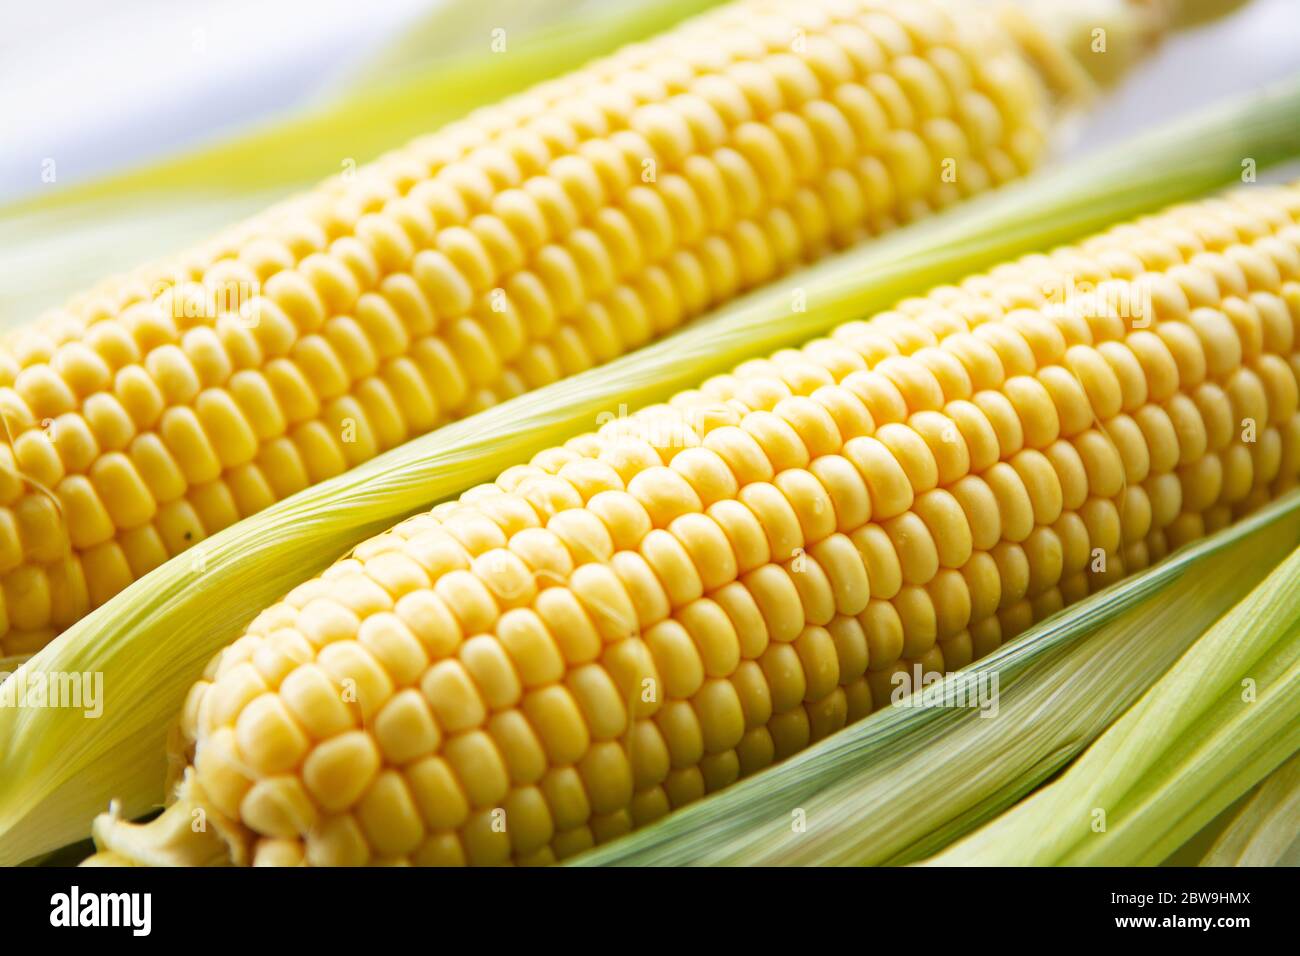 Fresh picked corn on the cob, close up Stock Photo